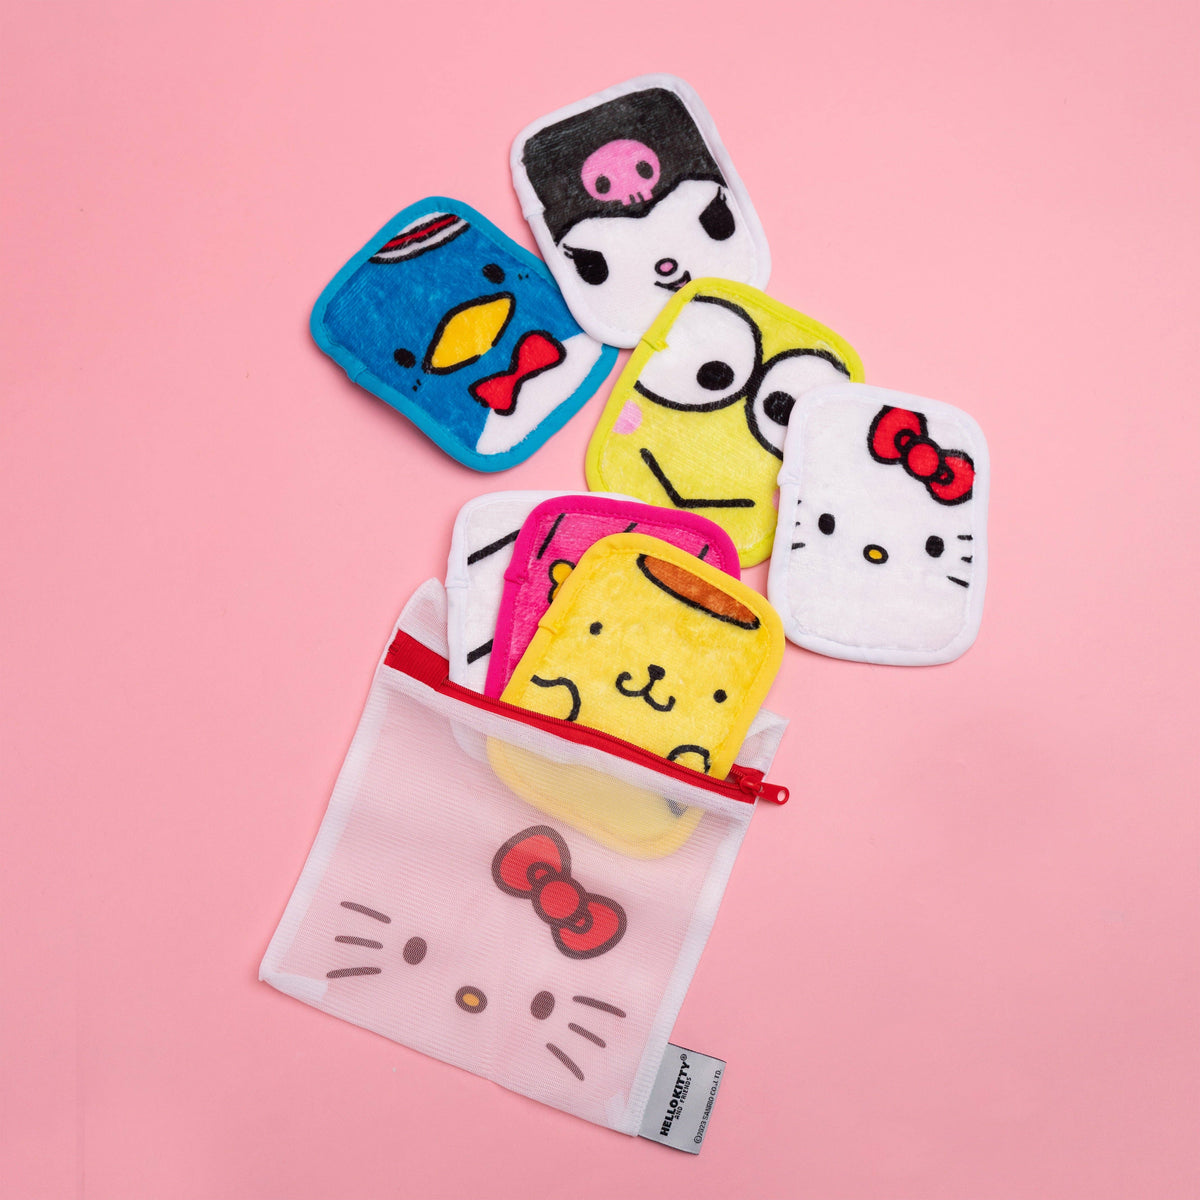 Hello Kitty &amp; Friends 7-Day Gift Set © Sanrio